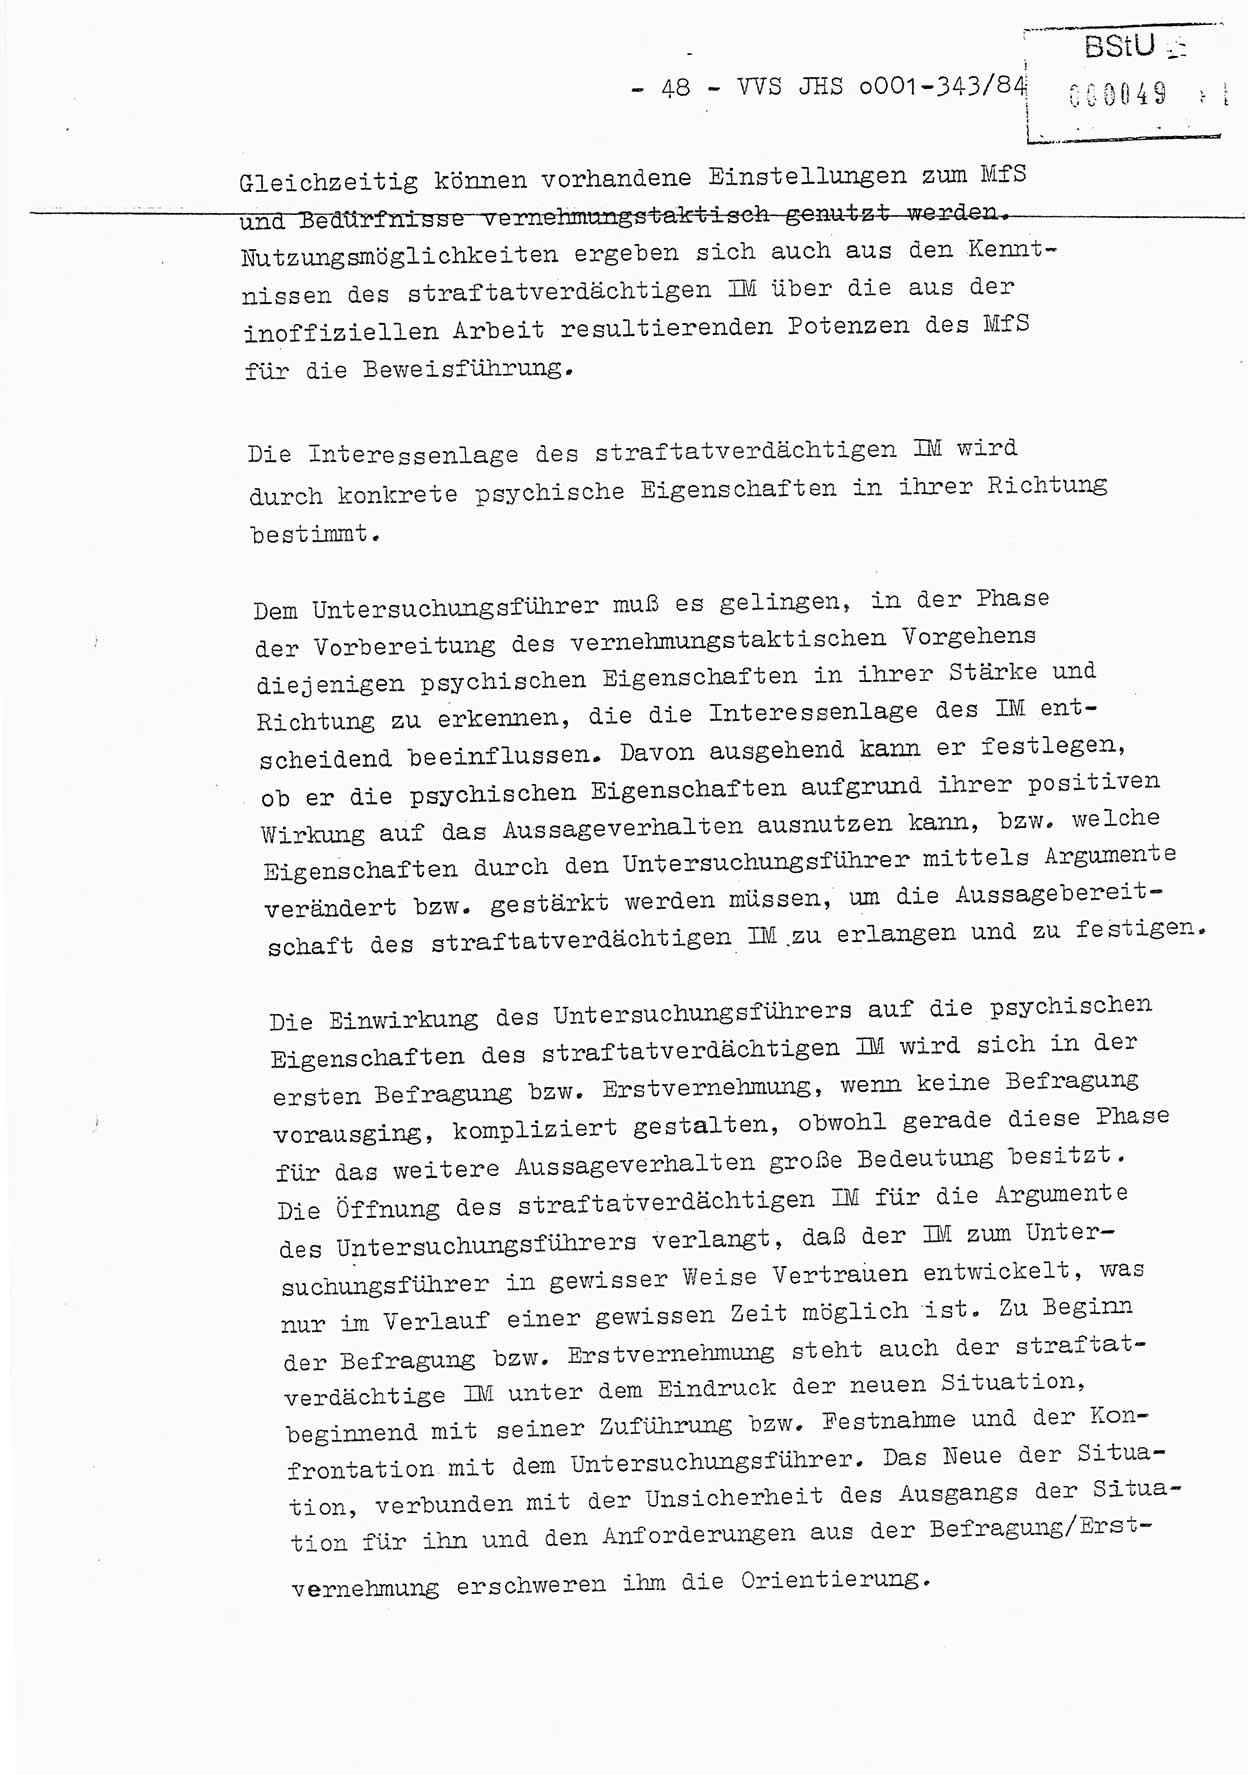 Diplomarbeit, Oberleutnant Bernd Michael (HA Ⅸ/5), Oberleutnant Peter Felber (HA IX/5), Ministerium für Staatssicherheit (MfS) [Deutsche Demokratische Republik (DDR)], Juristische Hochschule (JHS), Vertrauliche Verschlußsache (VVS) o001-343/84, Potsdam 1985, Seite 48 (Dipl.-Arb. MfS DDR JHS VVS o001-343/84 1985, S. 48)